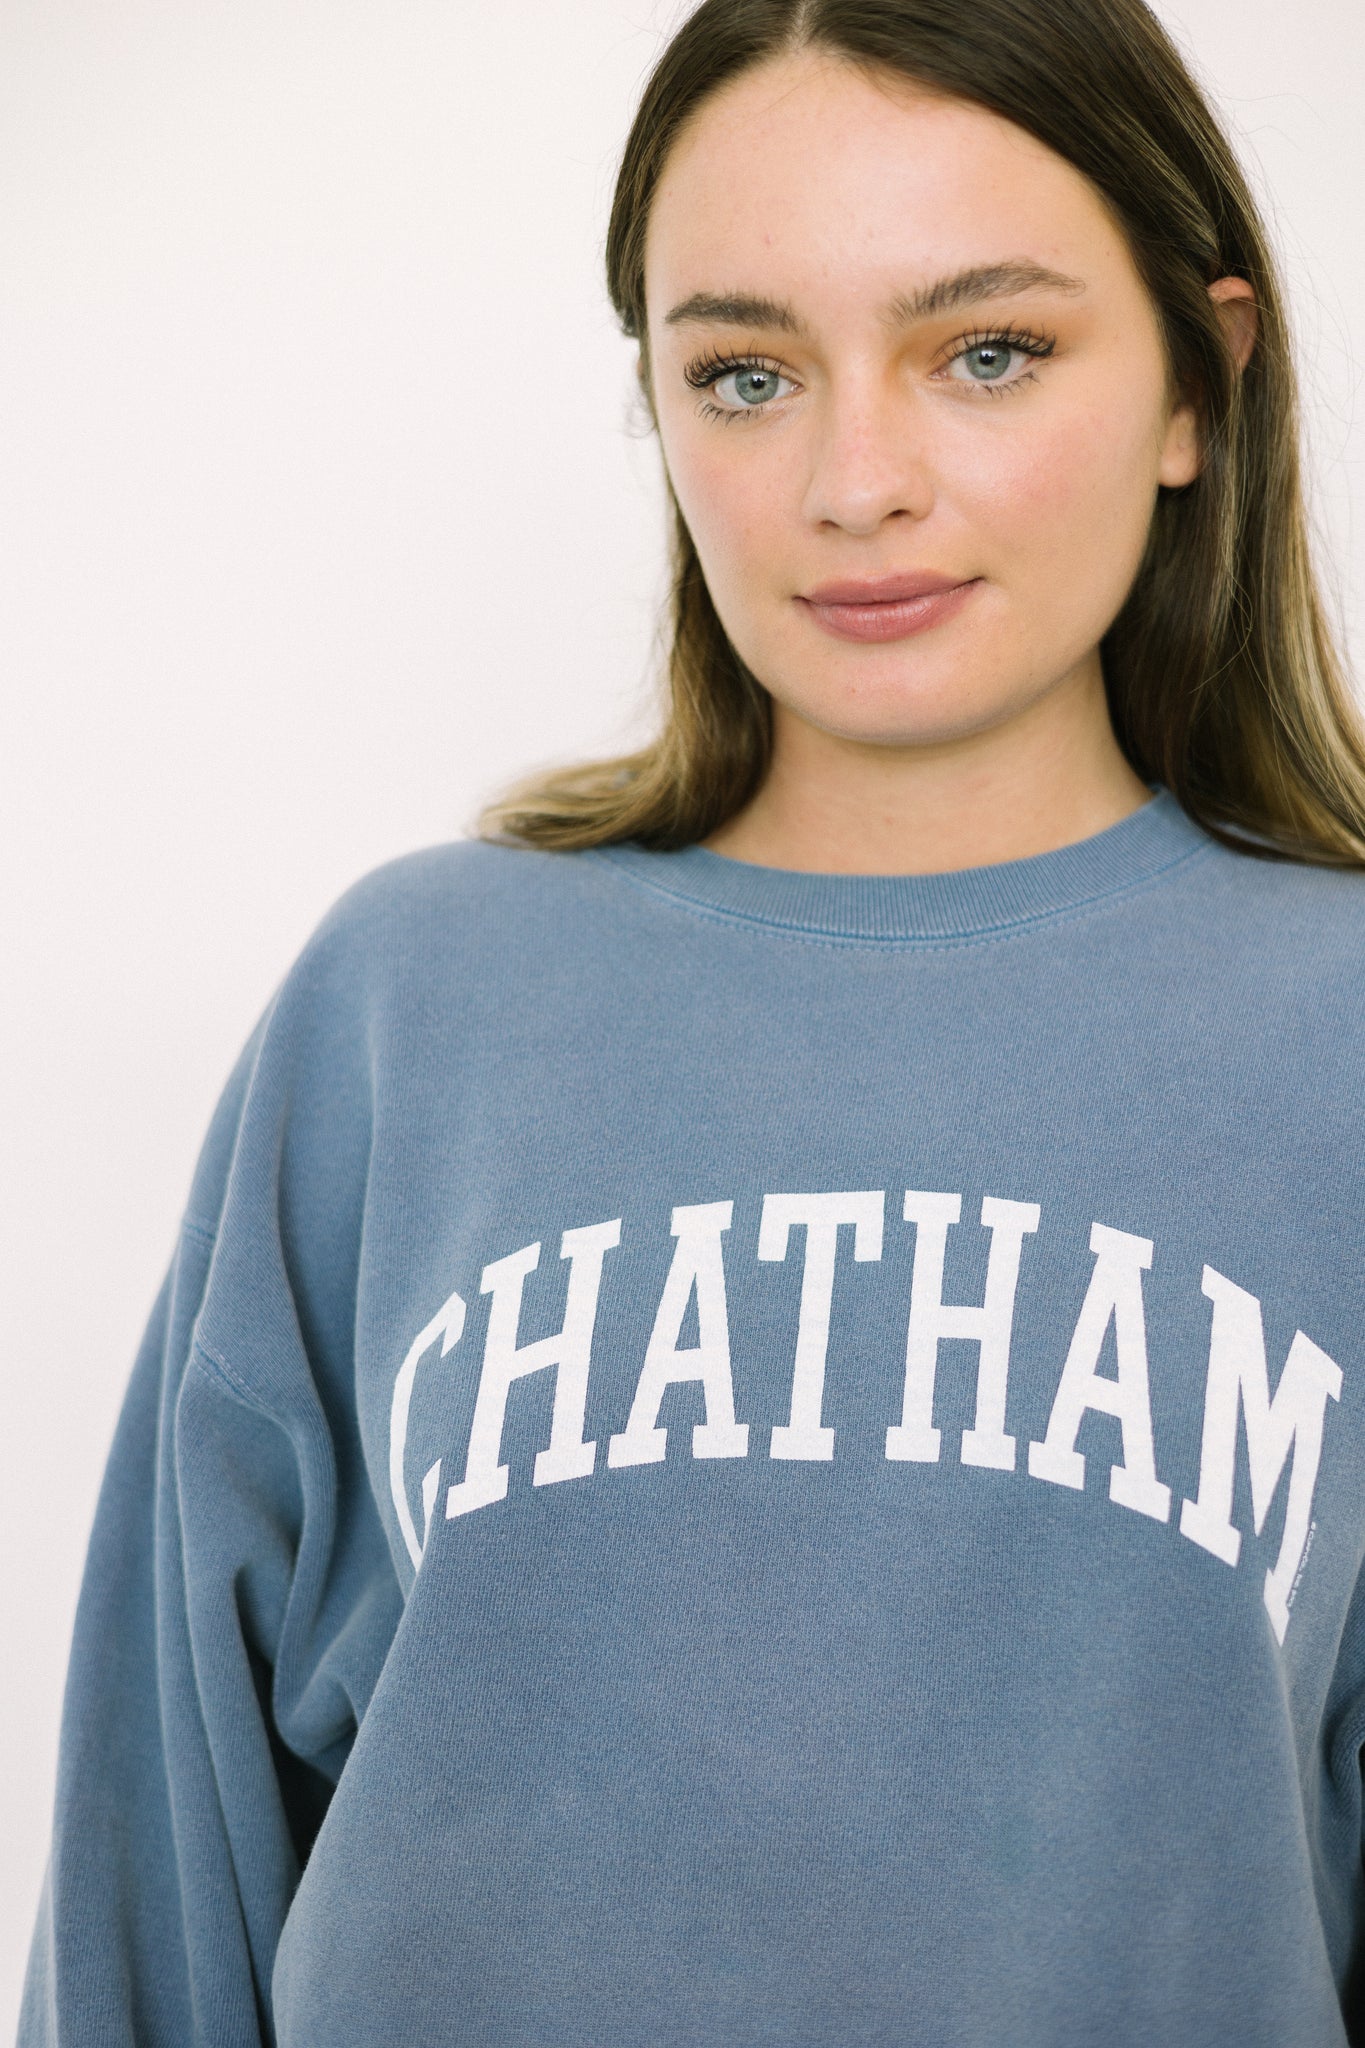 Chatham Sweatshirt